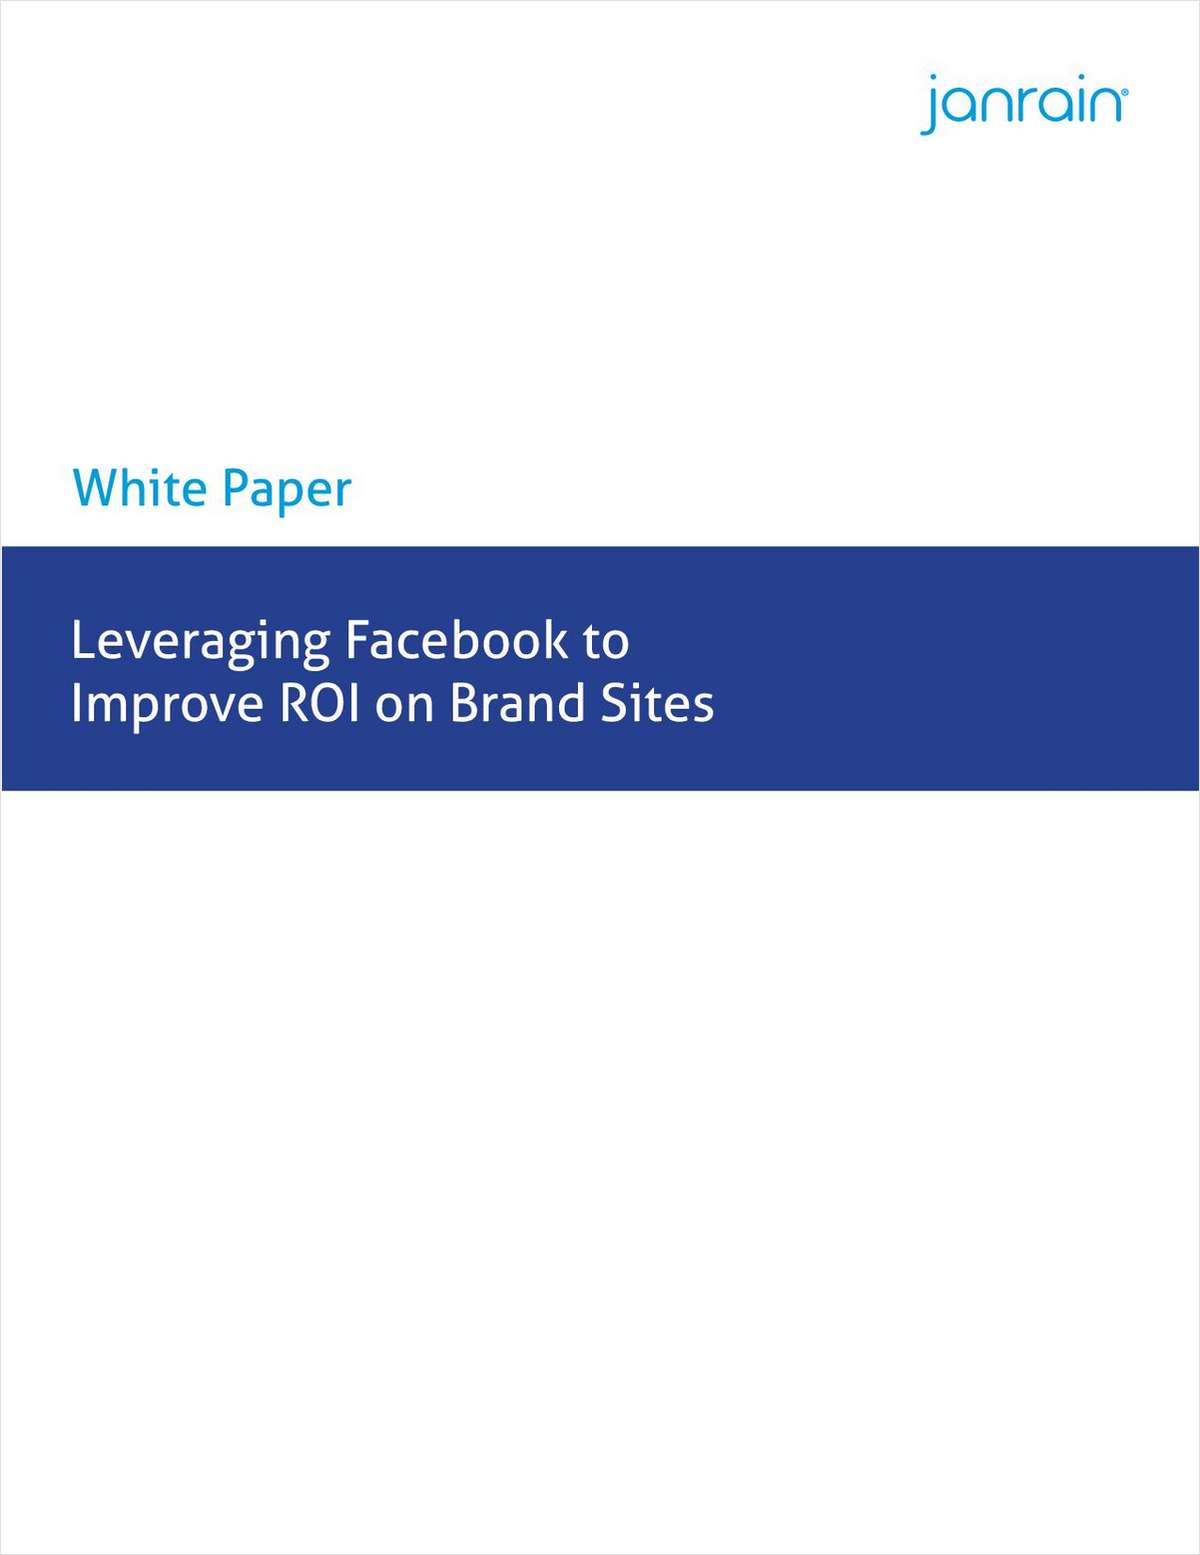 Leveraging Facebook to Improve ROI on Brand Sites